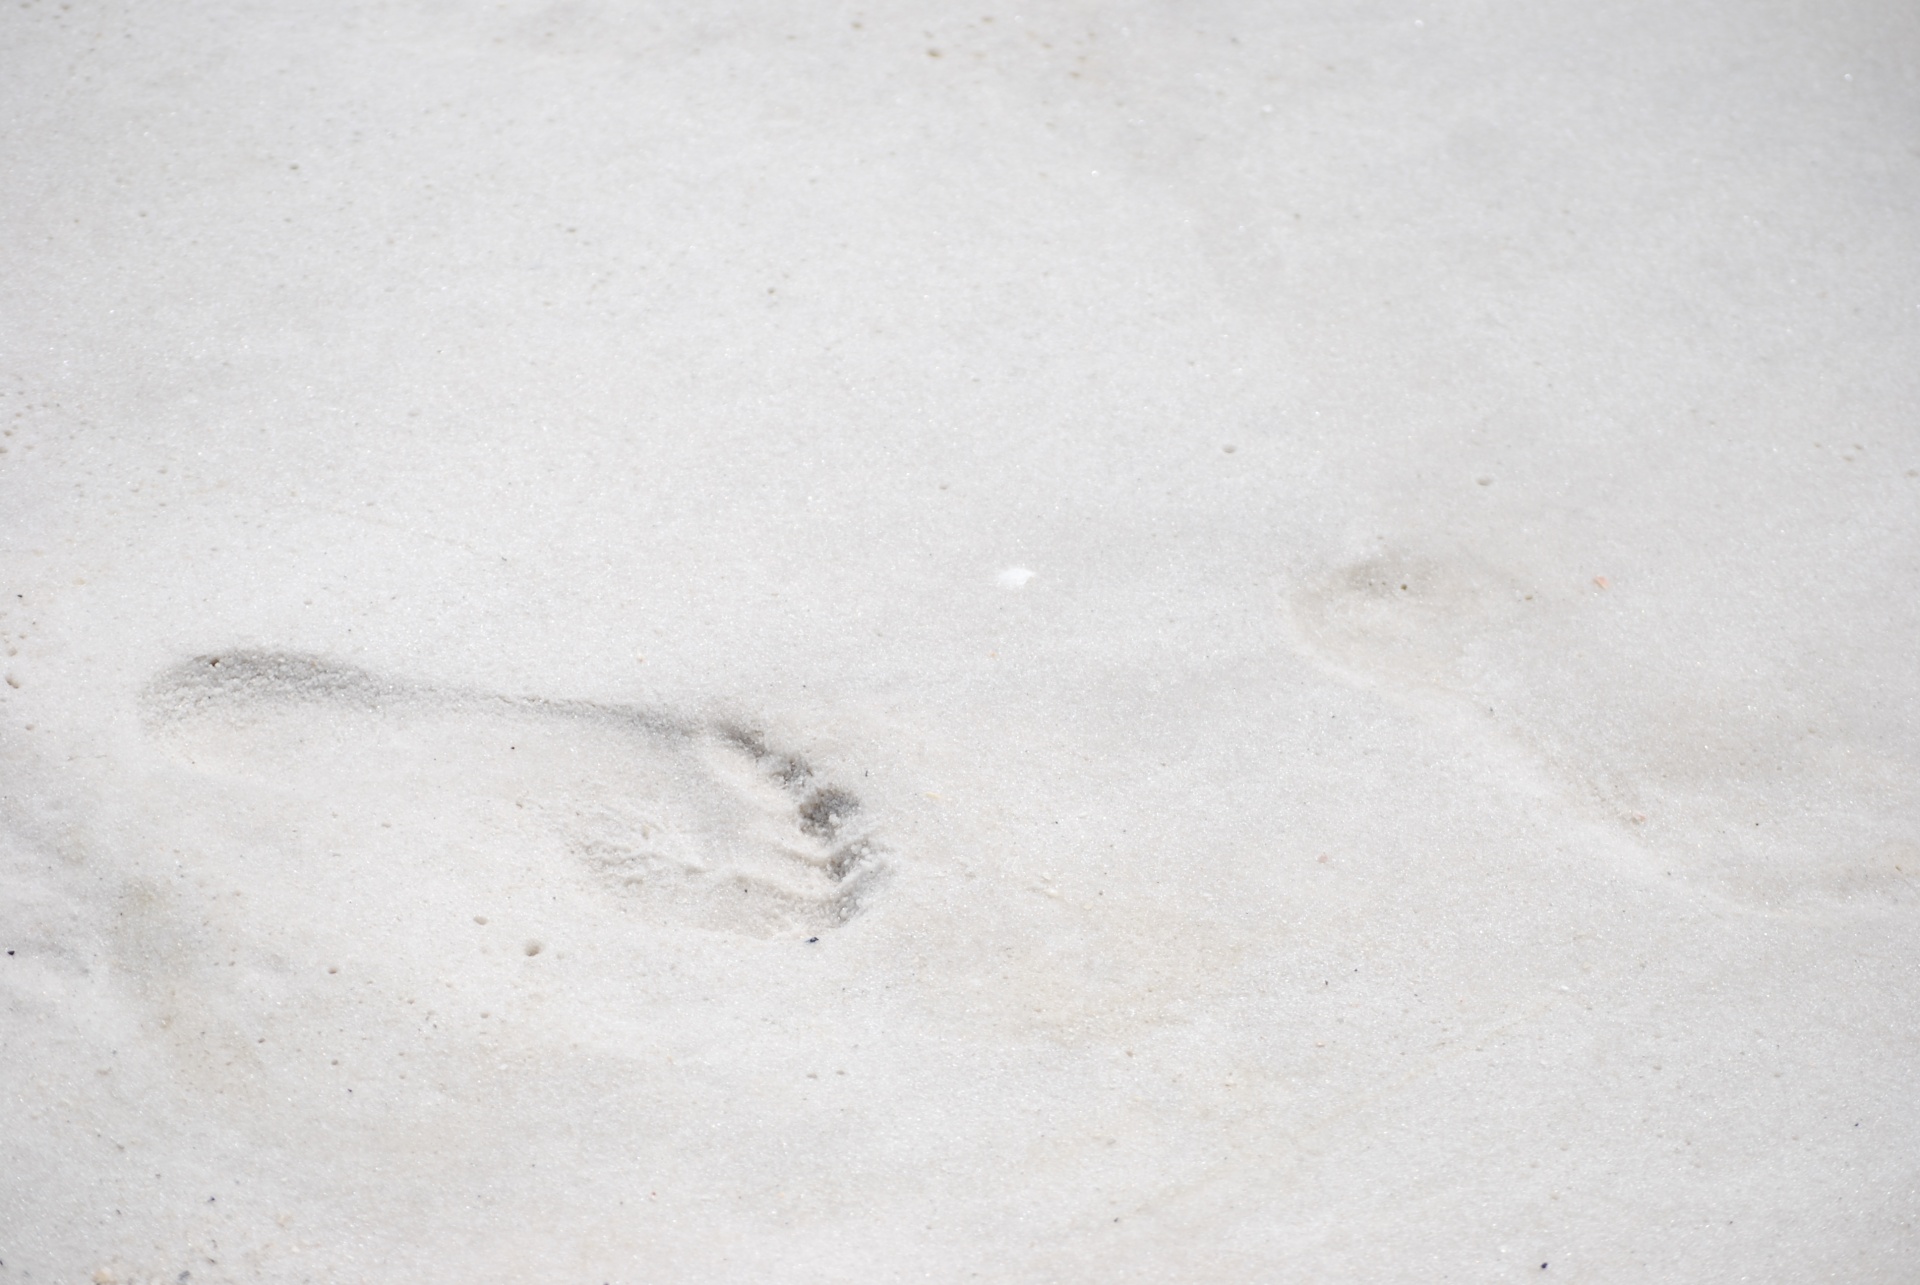 beach sand footprint free photo